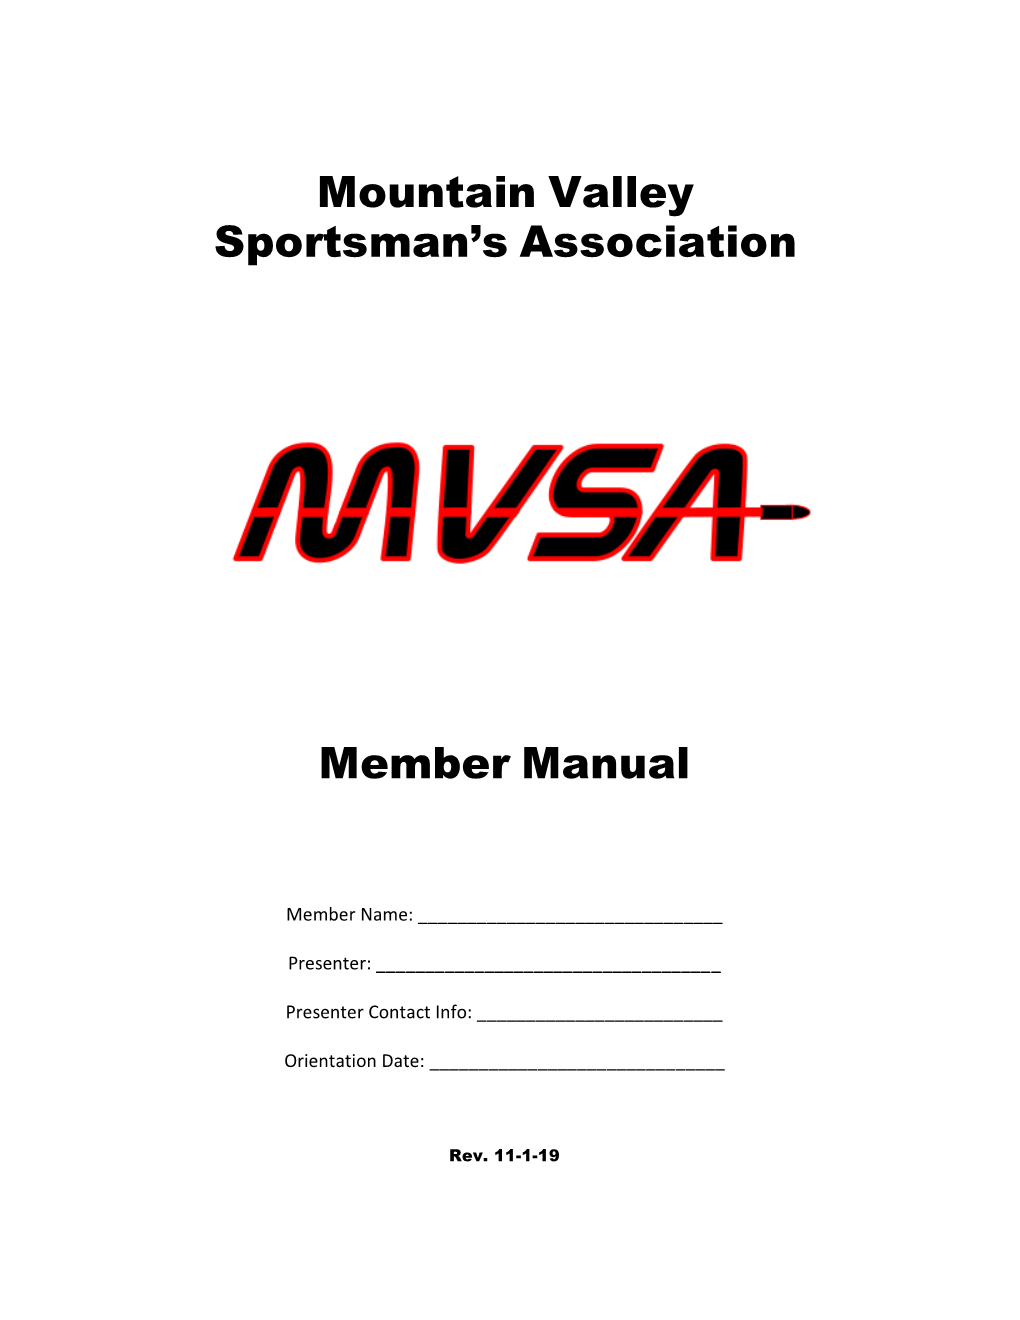 Mountain Valley Sportsman's Association Member Manual